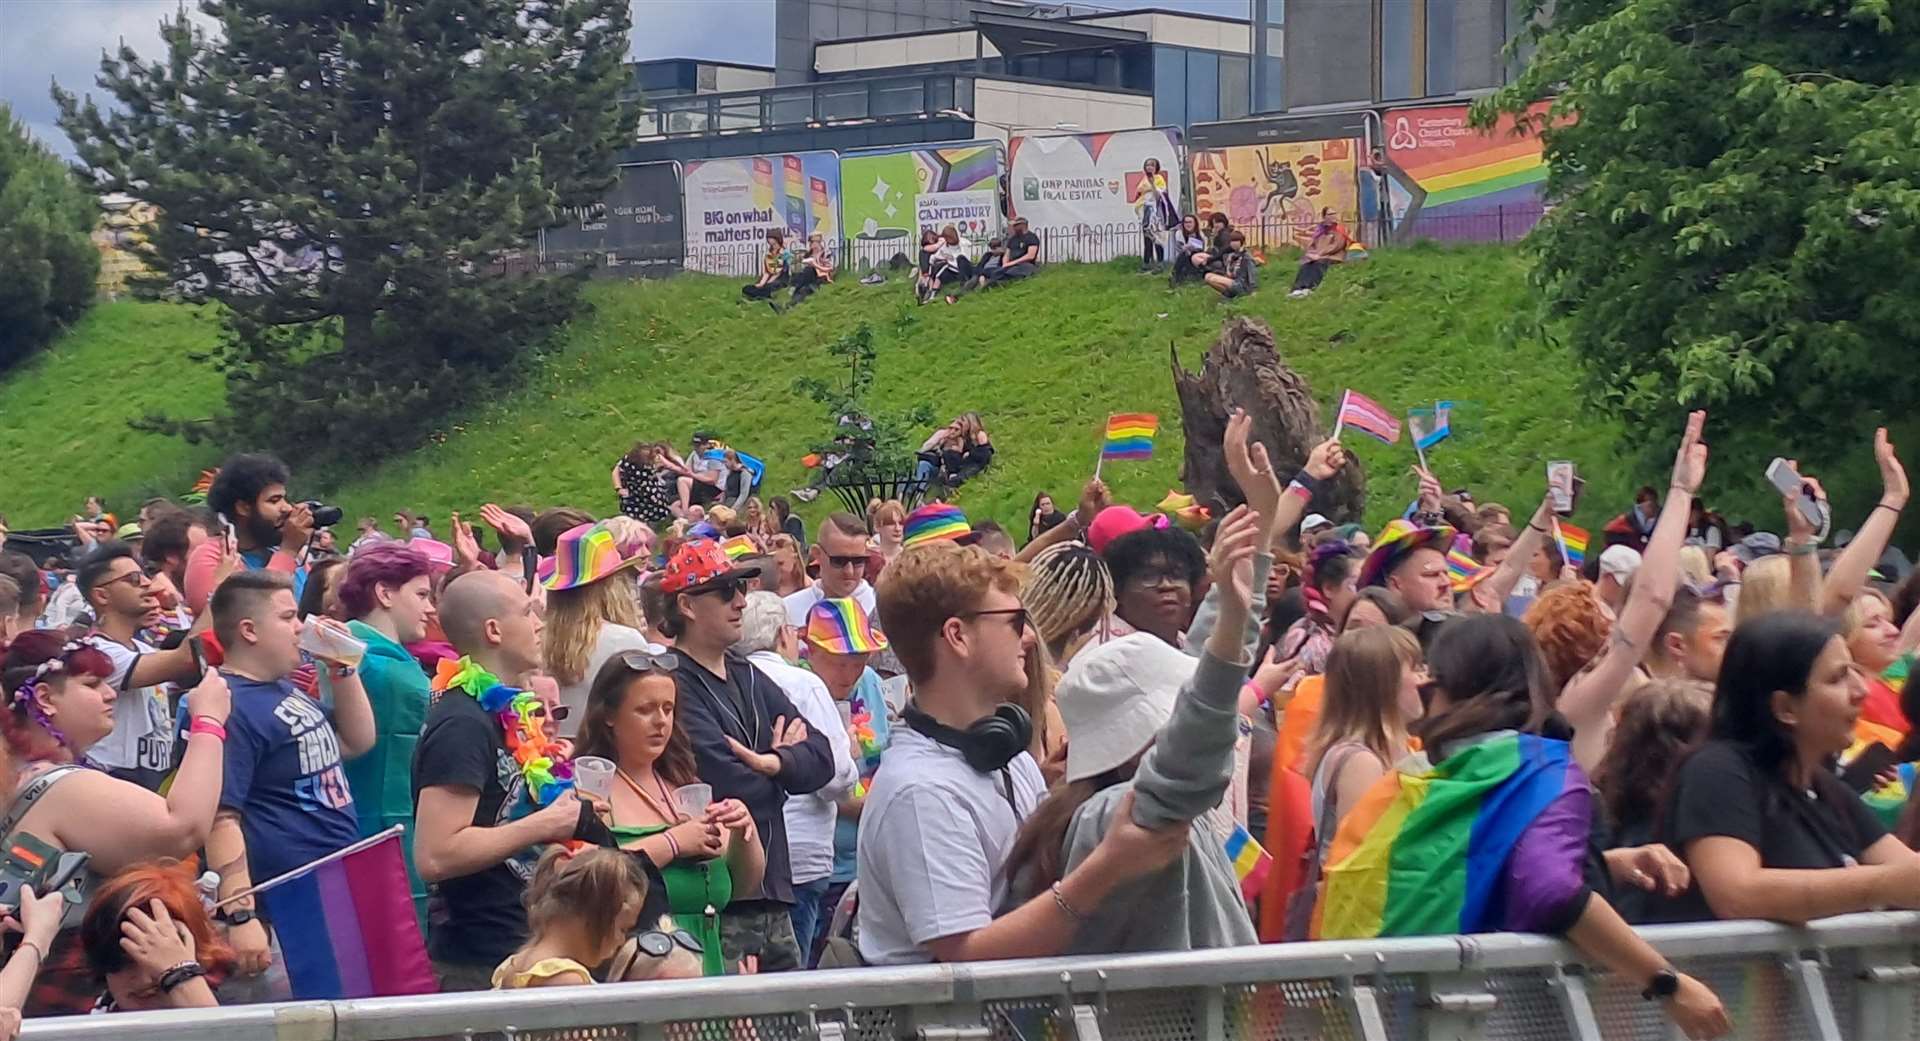 Canterbury Pride festival is underway in Dane John Gardens